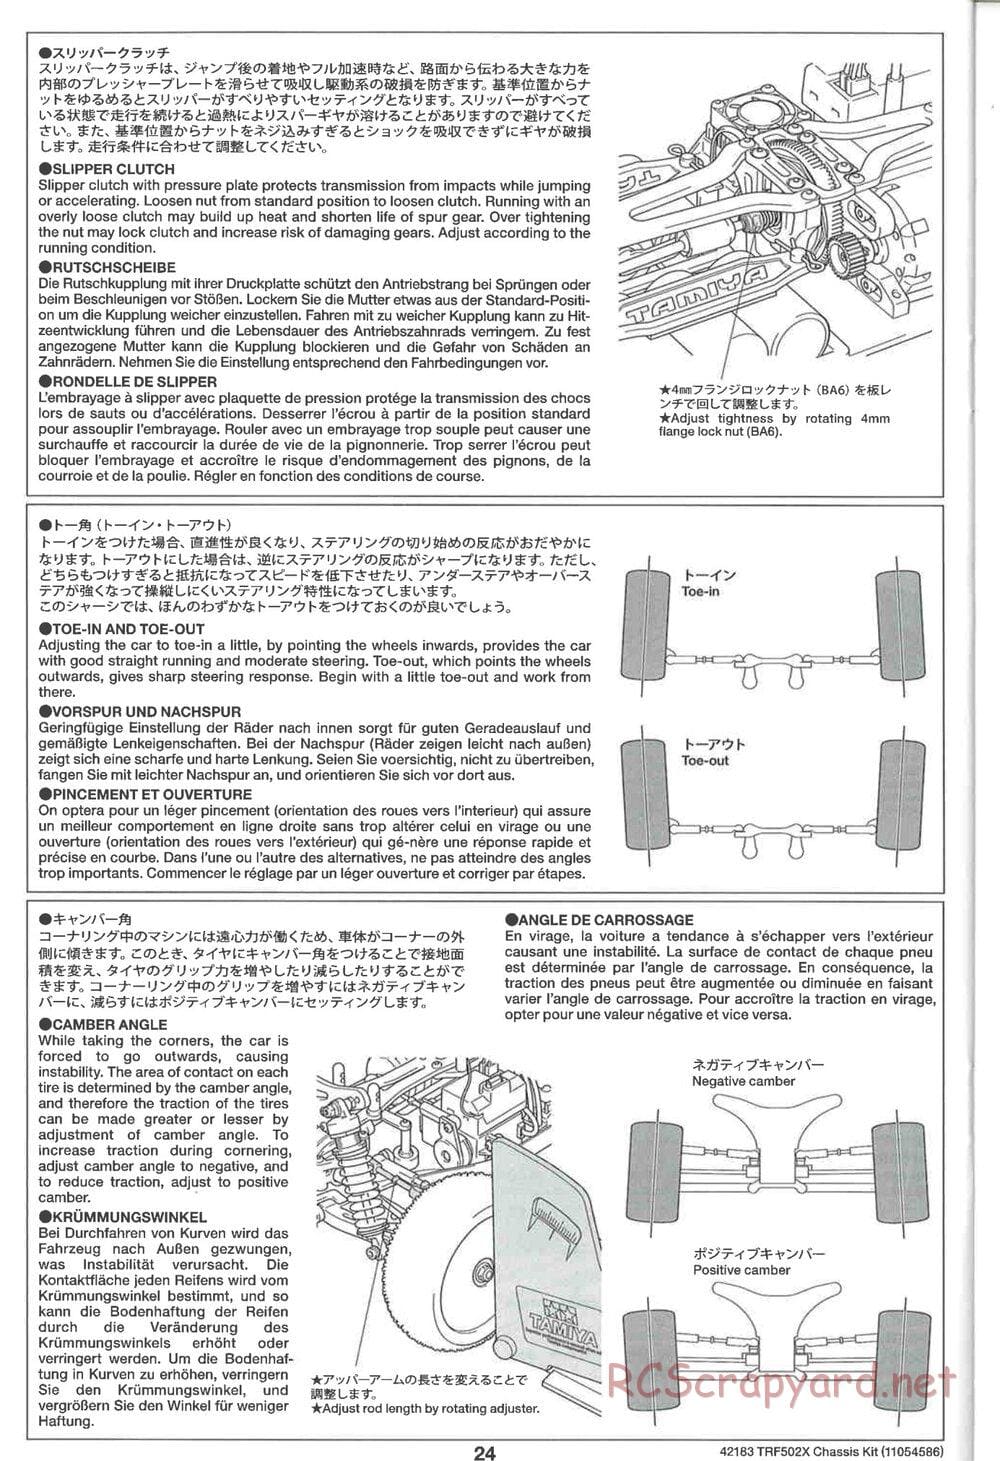 Tamiya - TRF502X Chassis - Manual - Page 24